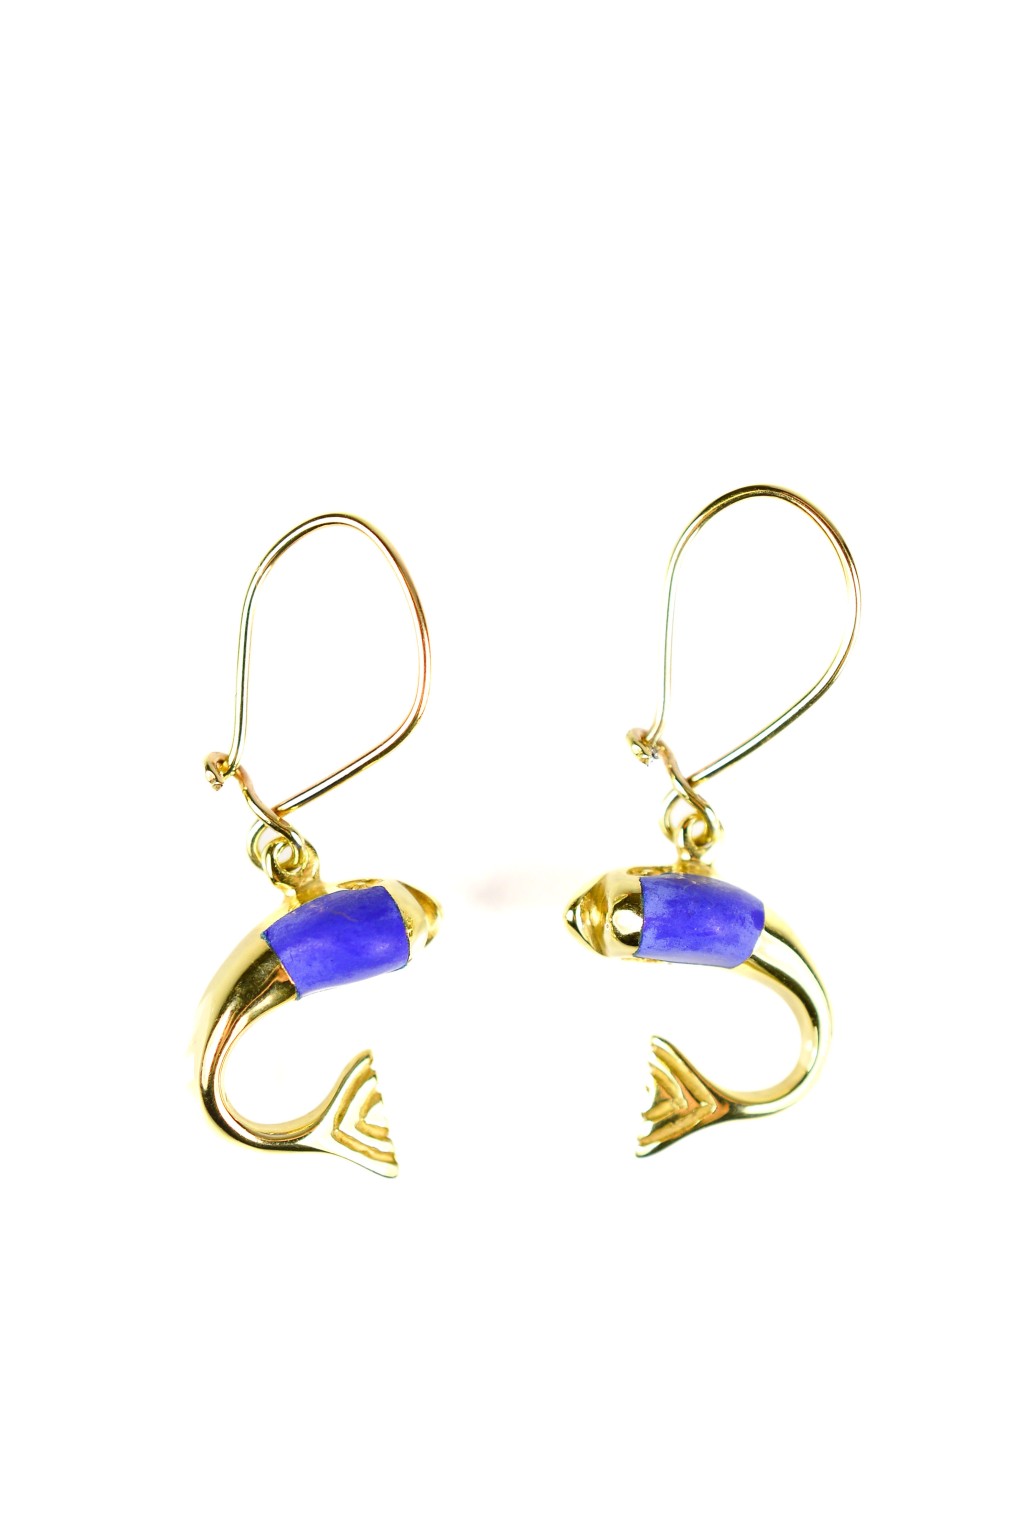 Zlaté náušnice s modrým kamenem - lapis lazuli